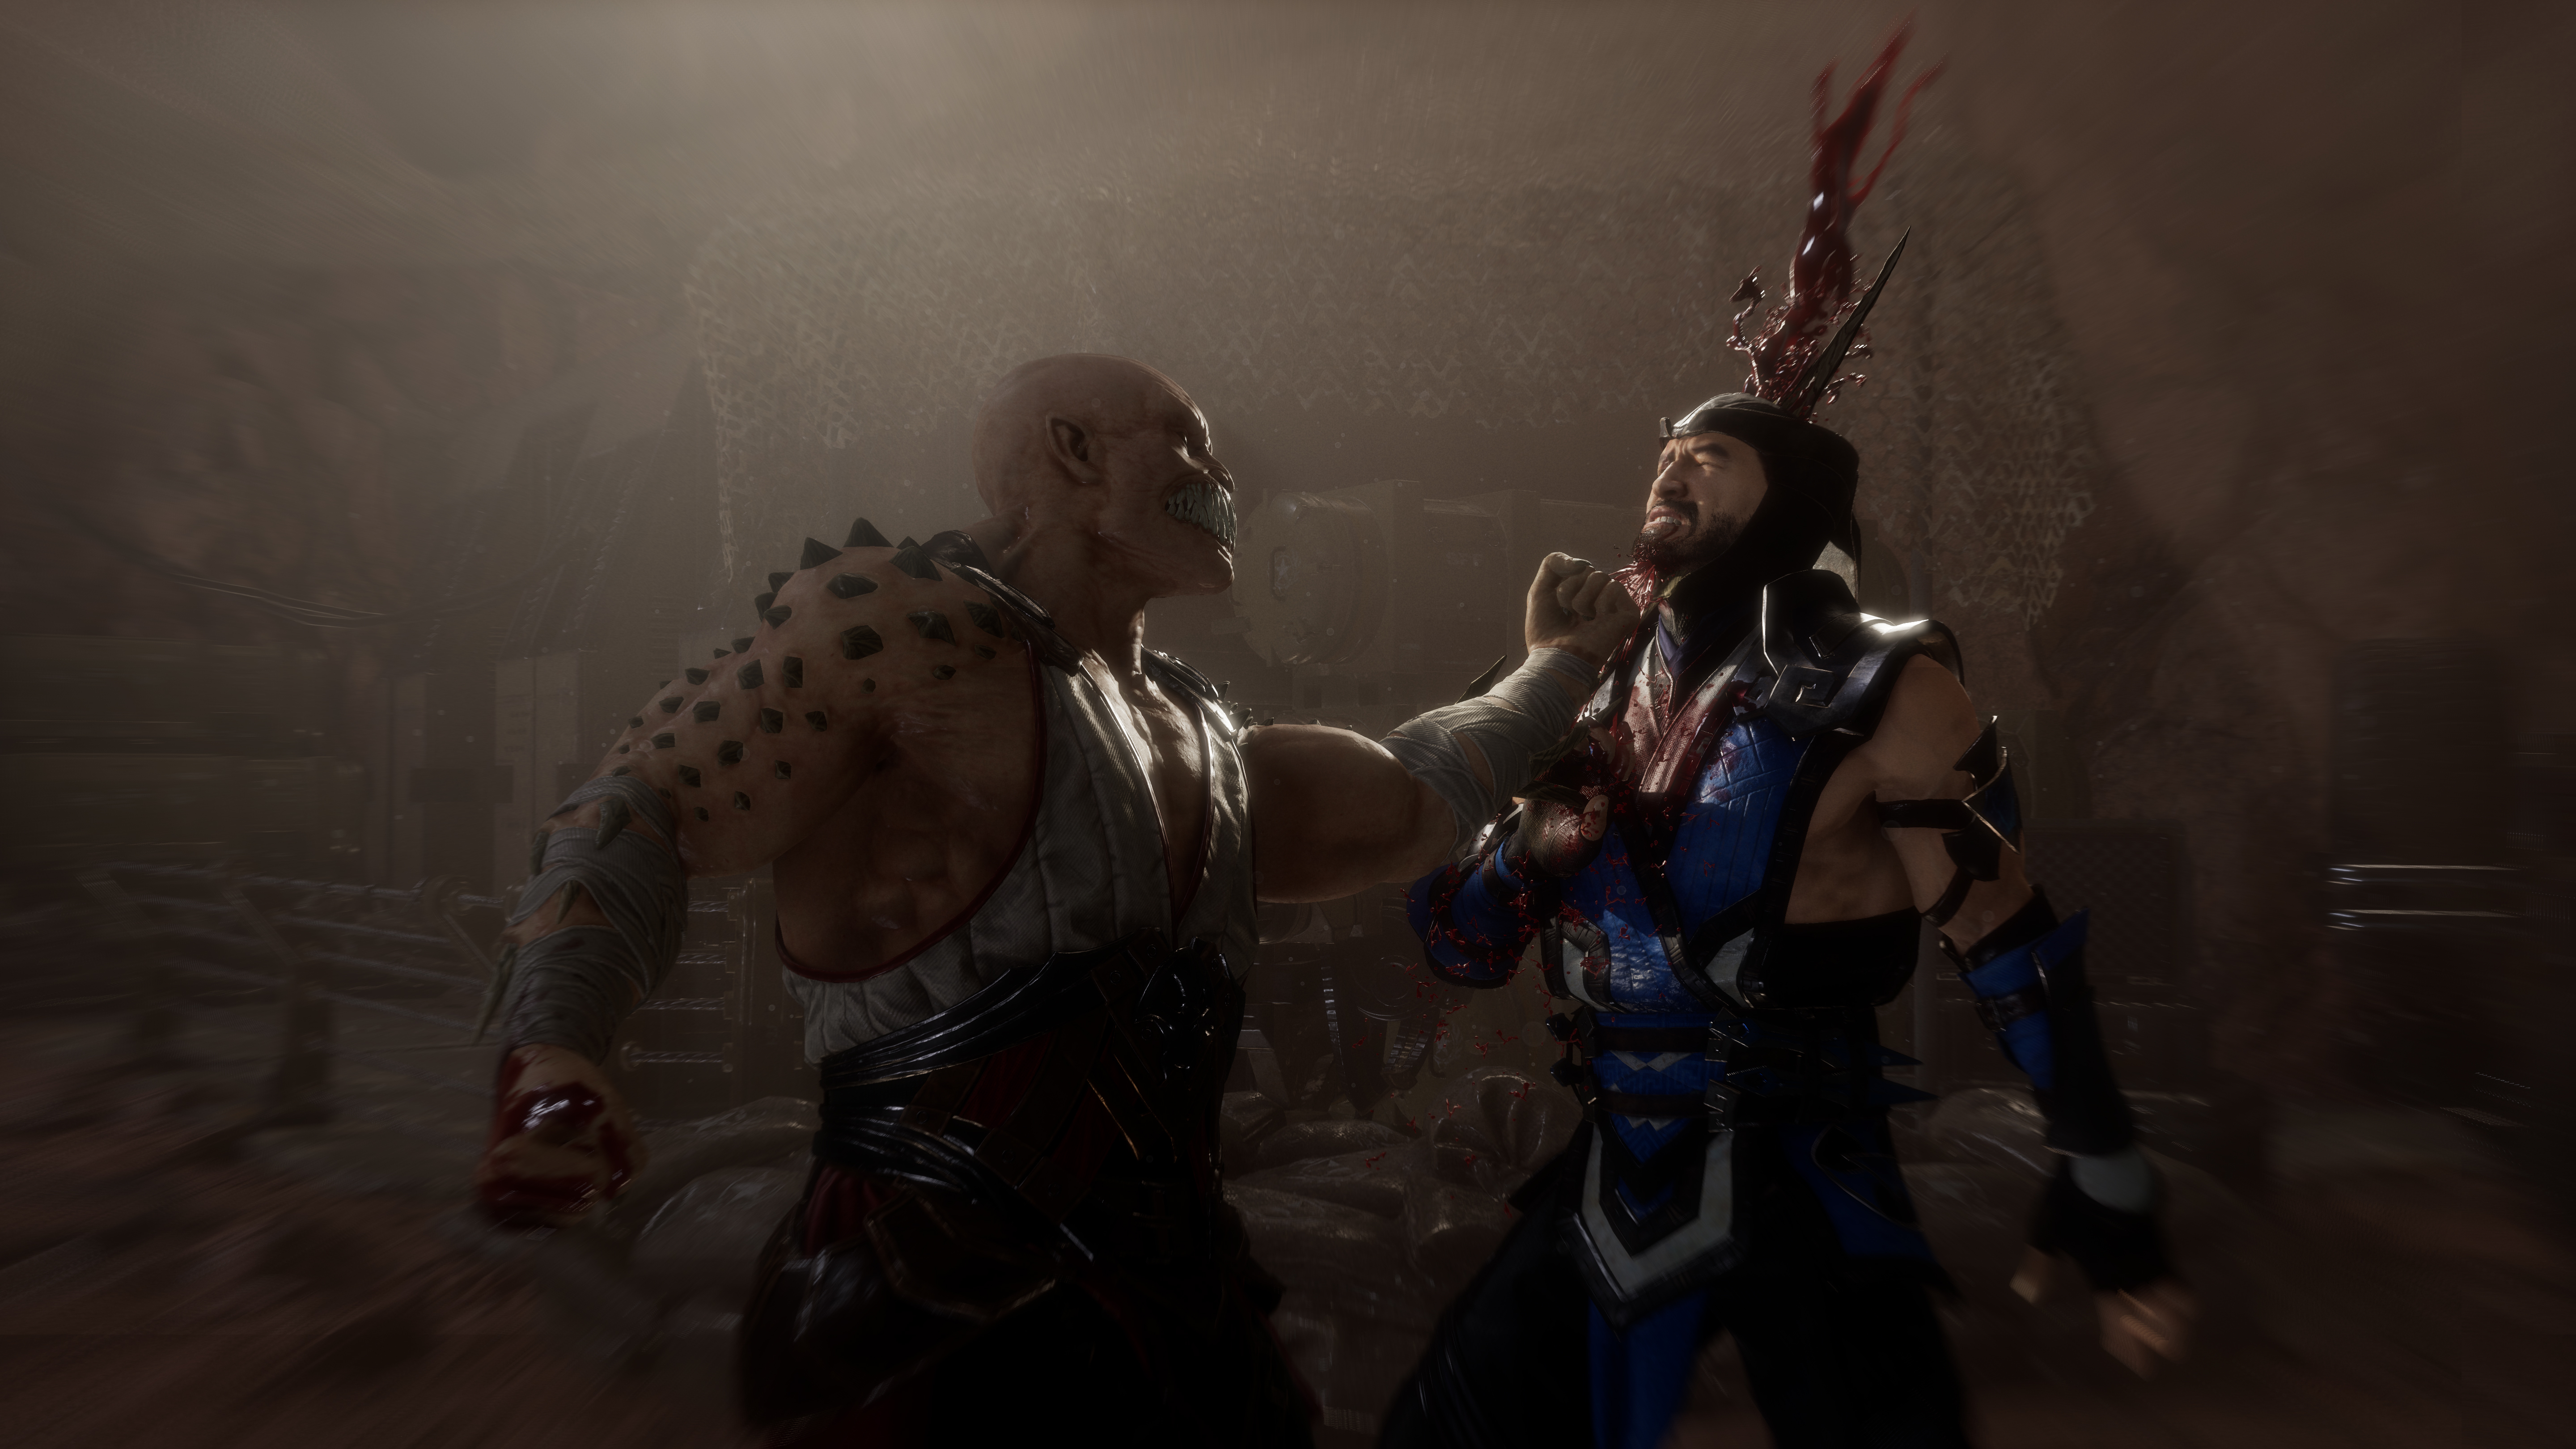 Mortal Kombat 11 Nightwolf Fatality Inputs: How To Do MK11